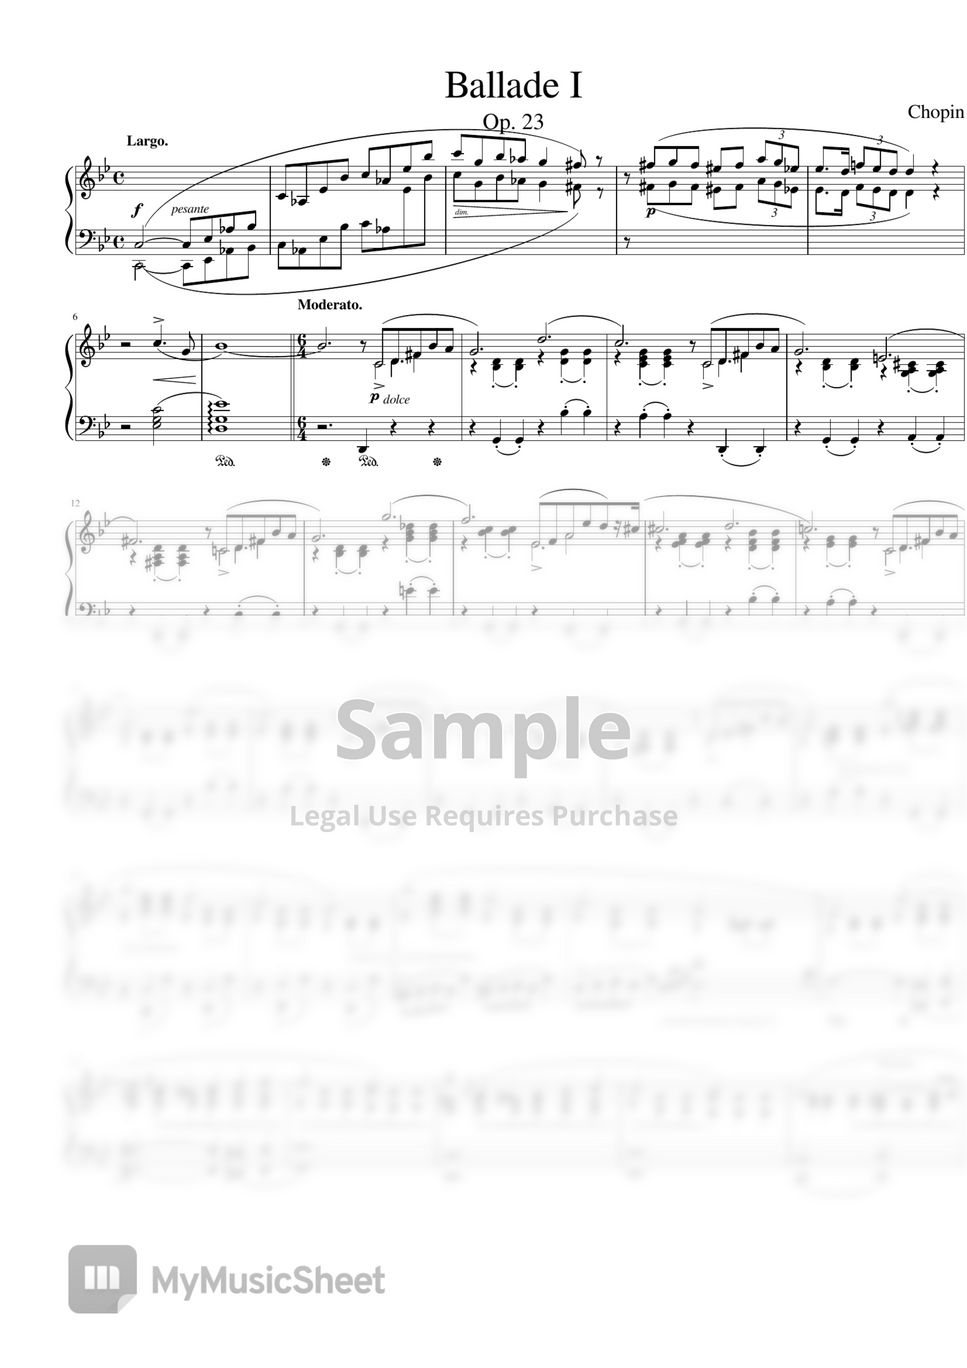 F. Chopin - Ballade no. 1 in G minor Op. 23 Sheets by F. Chopin